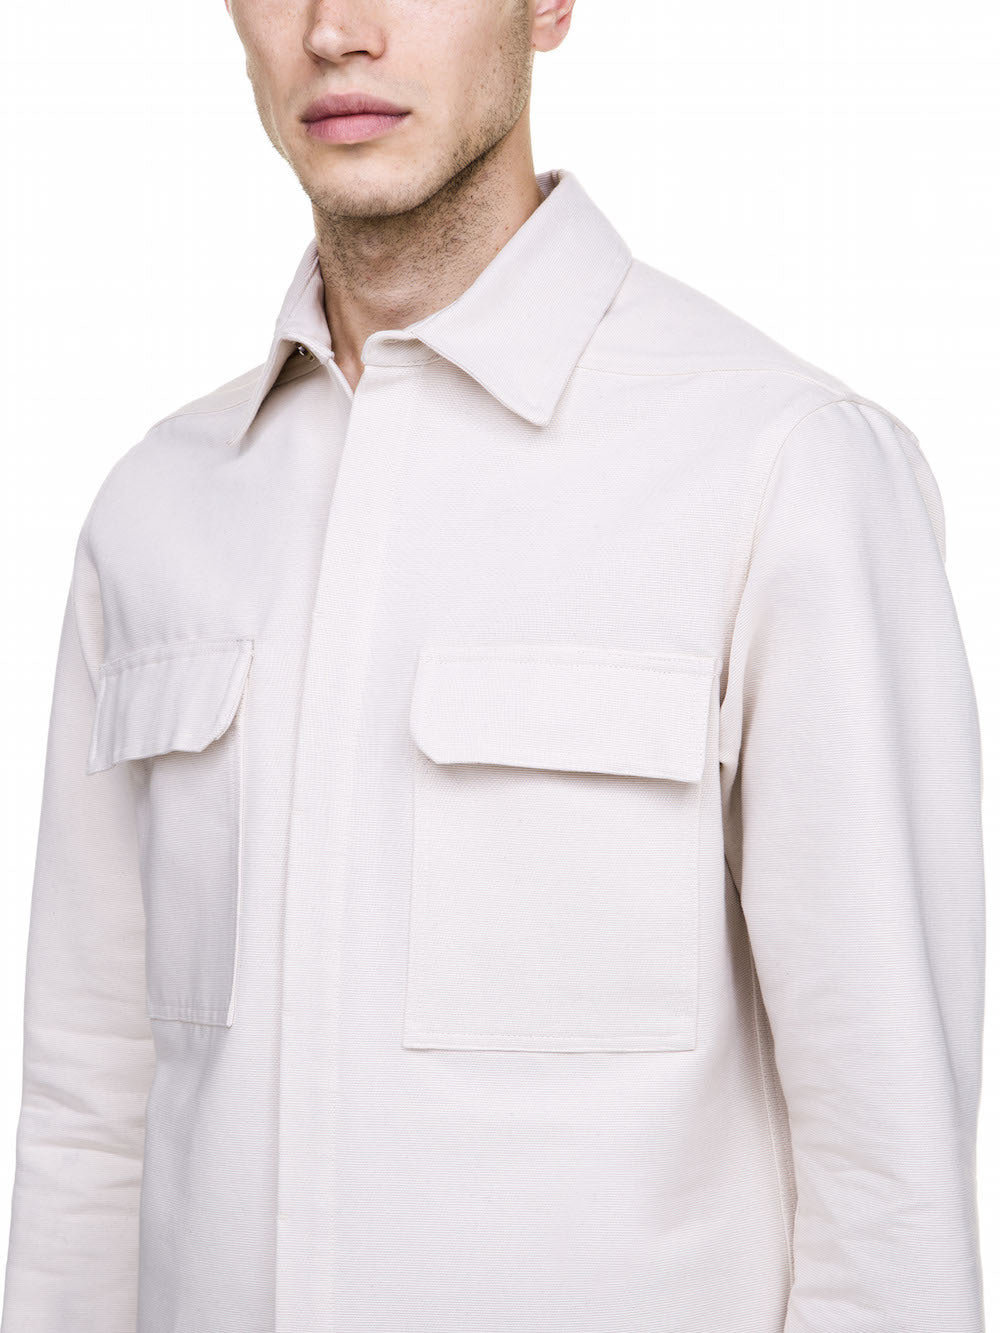 Rick Owens White Shirt